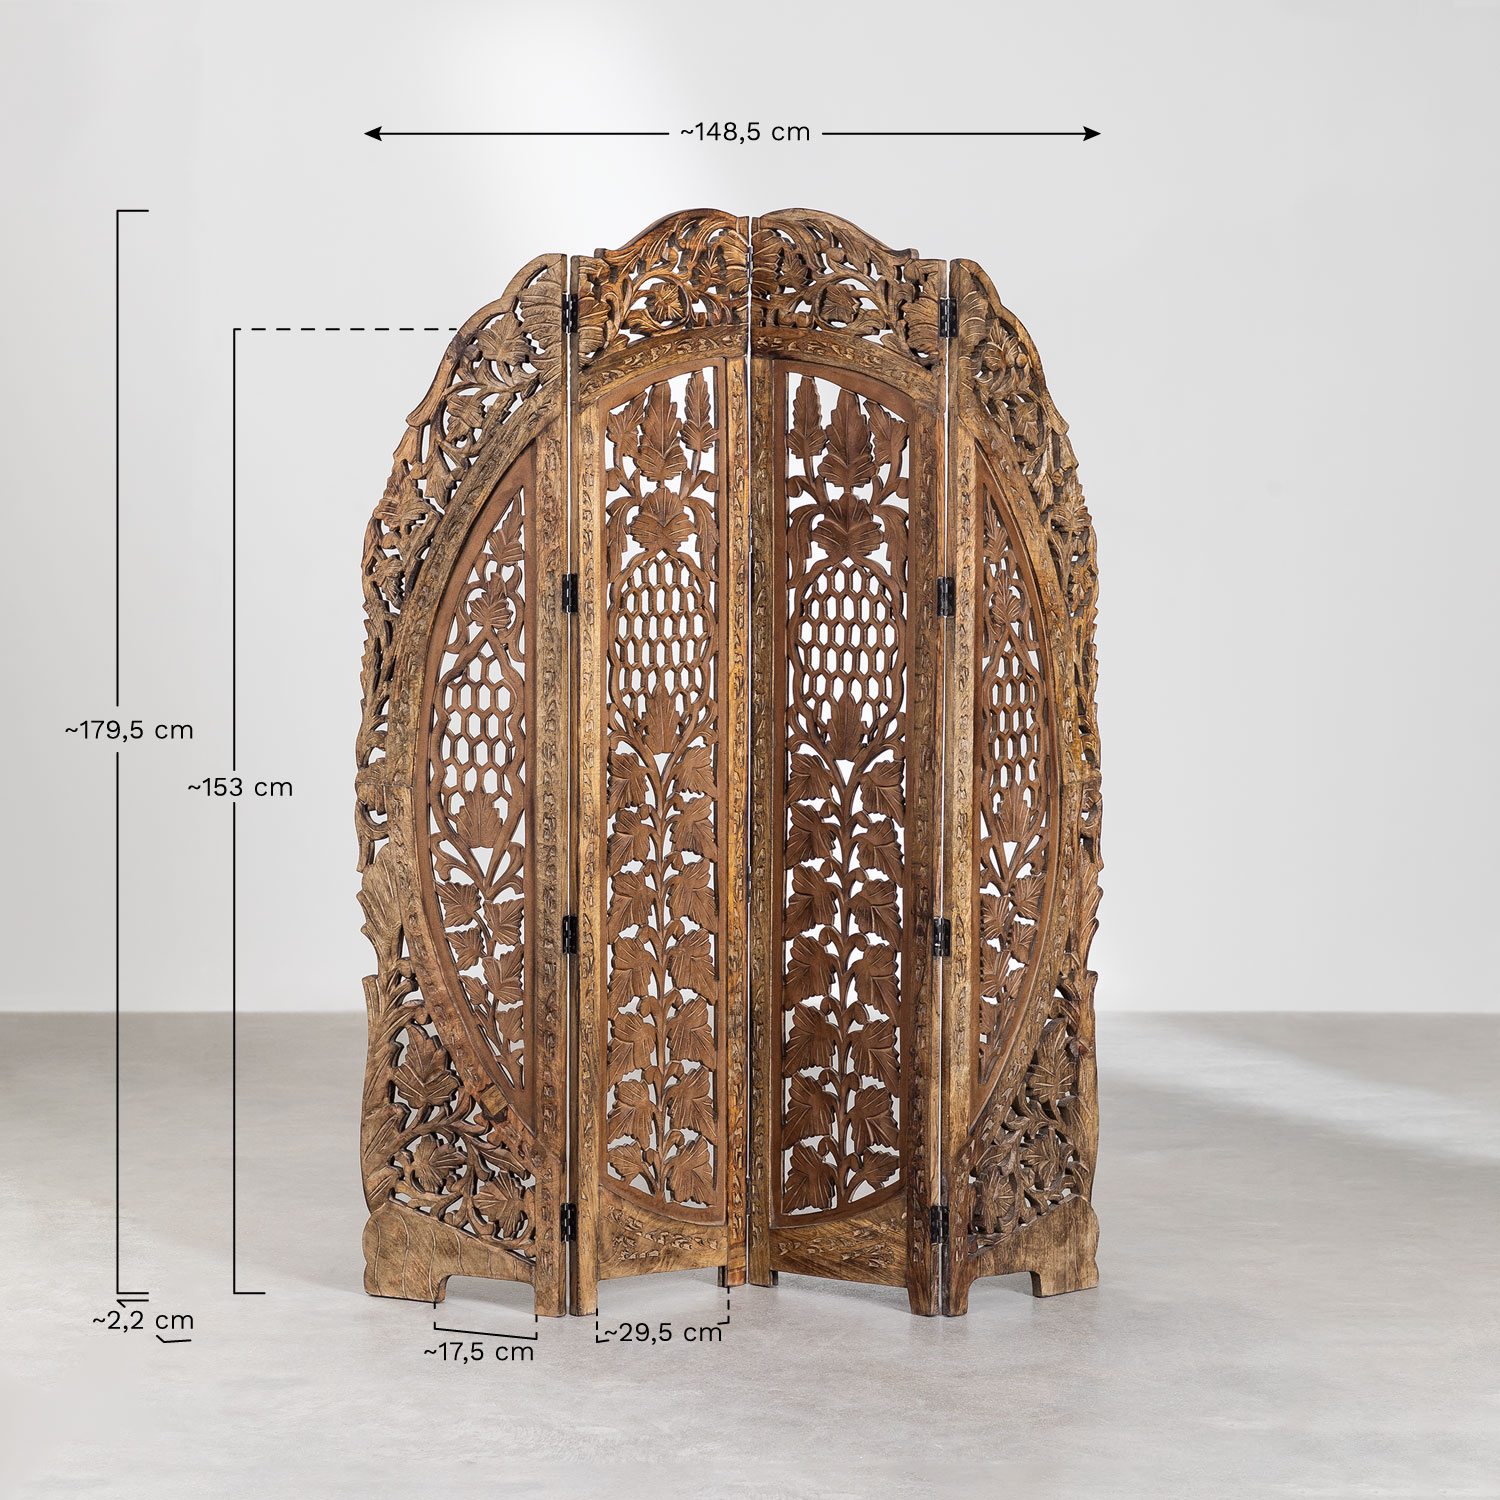 Biombo Decorativo De Madera, 3 Paneles Diseño De Ramas